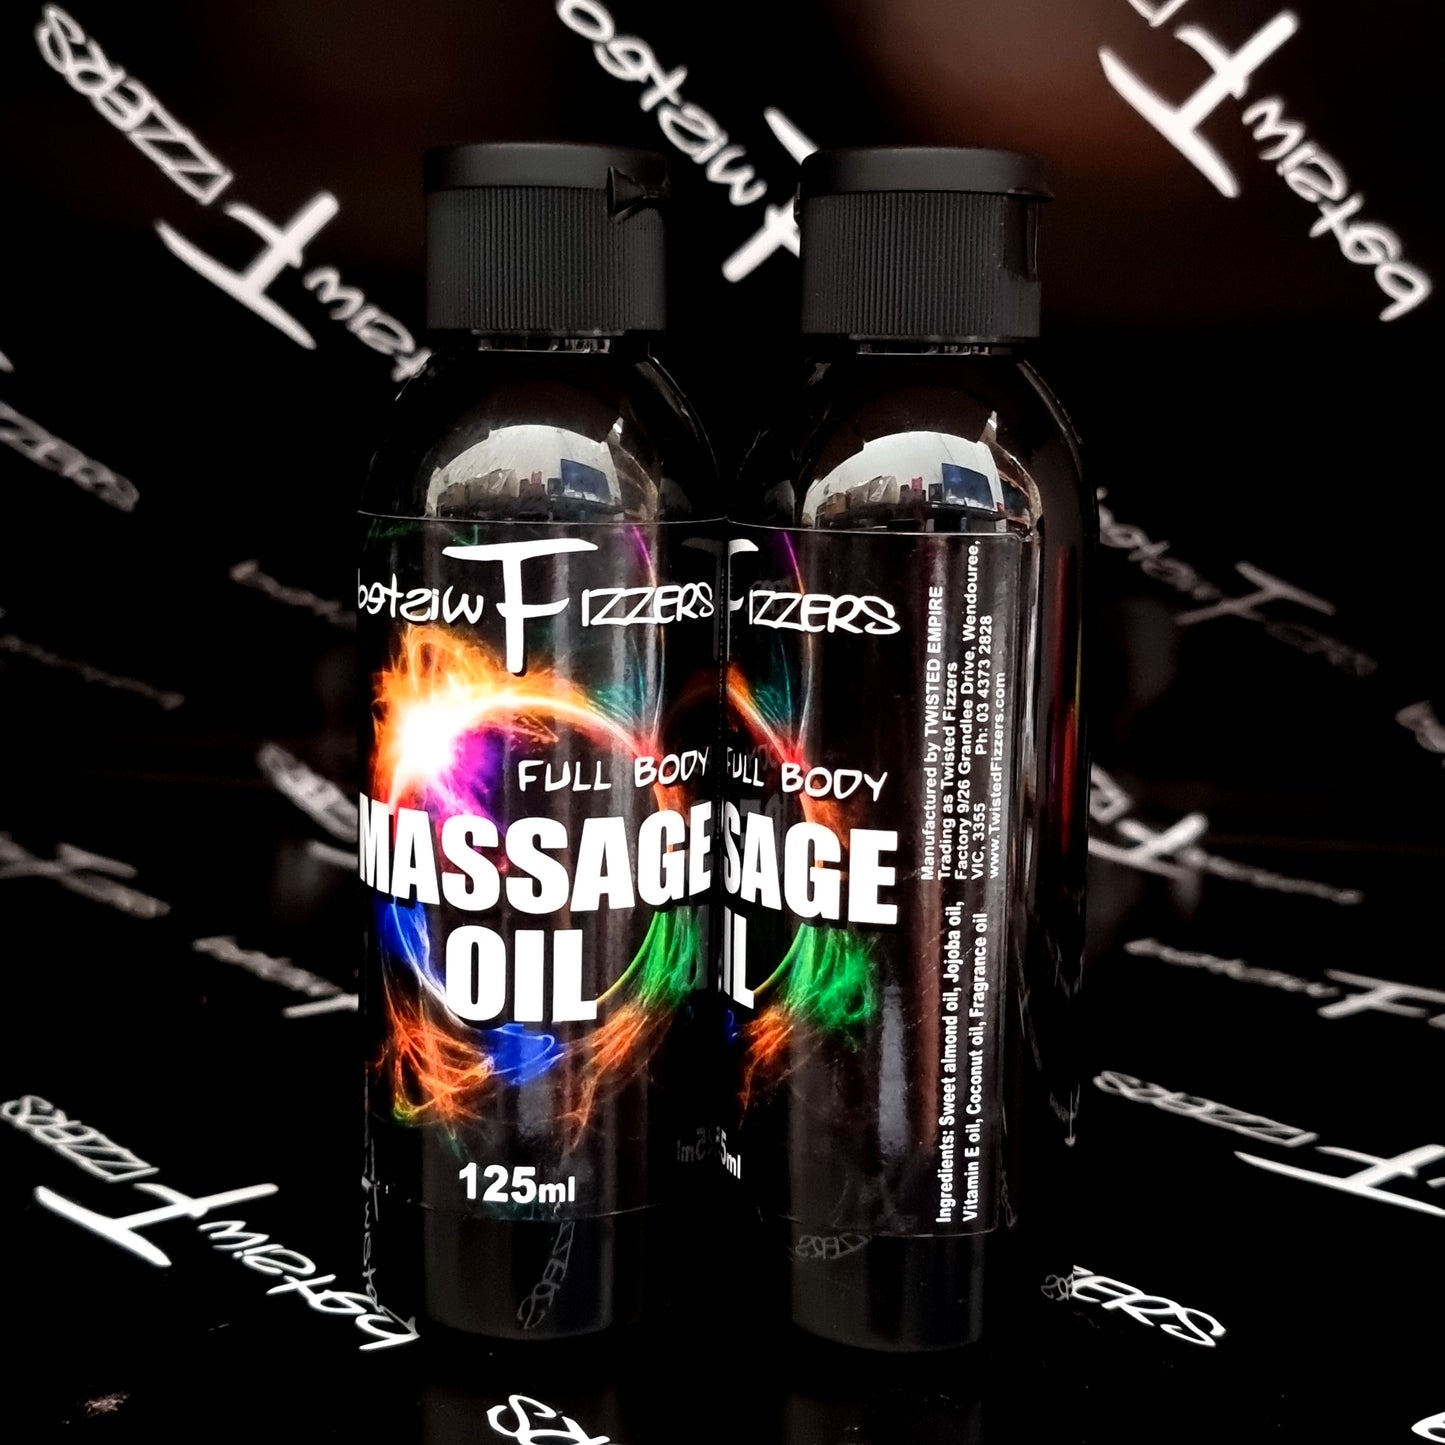 Massage & Bath Oil - 125ml Bottle